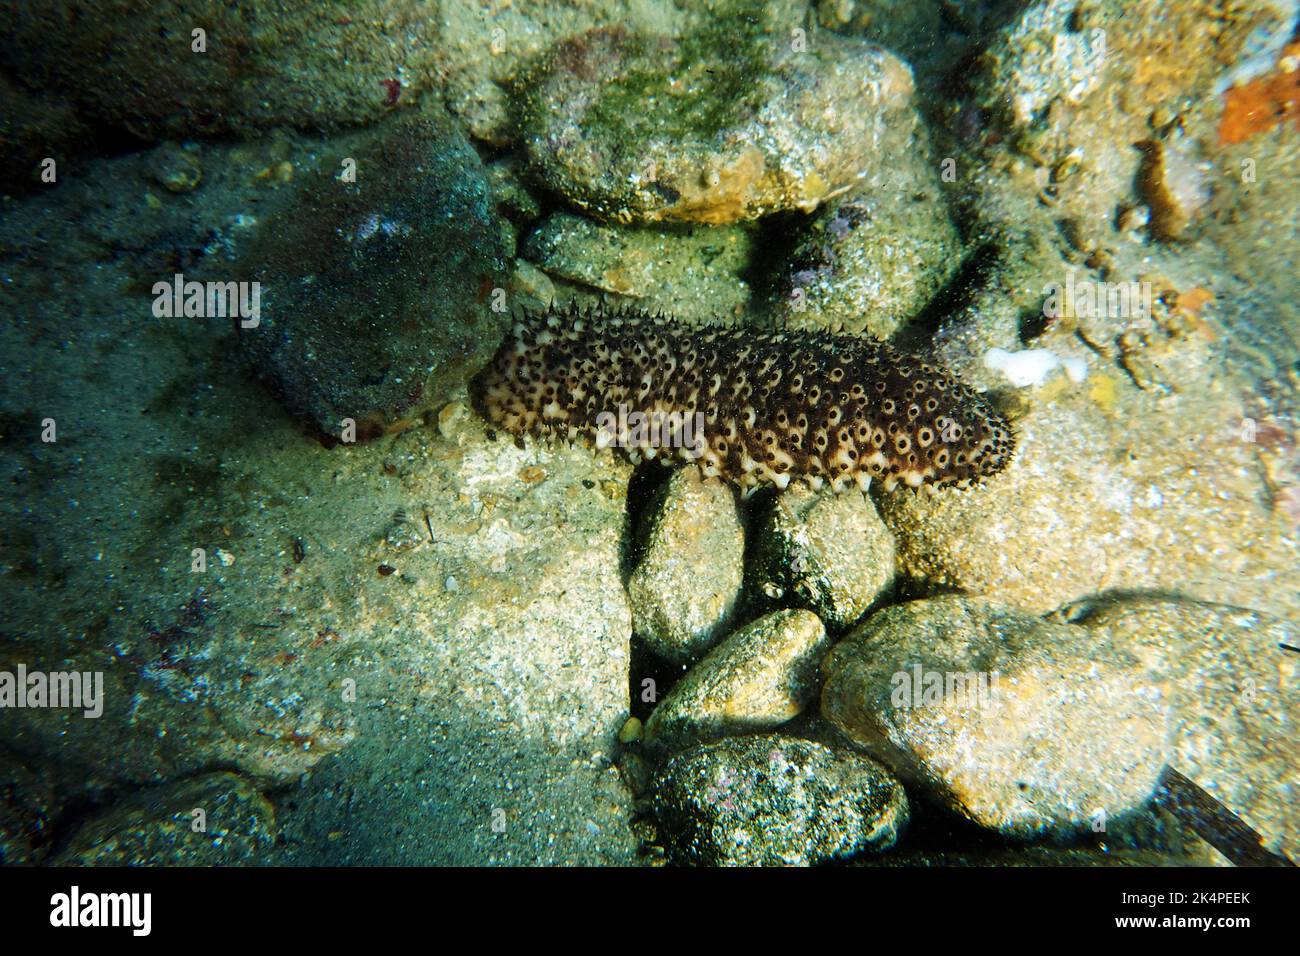 Underwater photography of Sea Cucumber - (Holothuria sanctori) Stock Photo